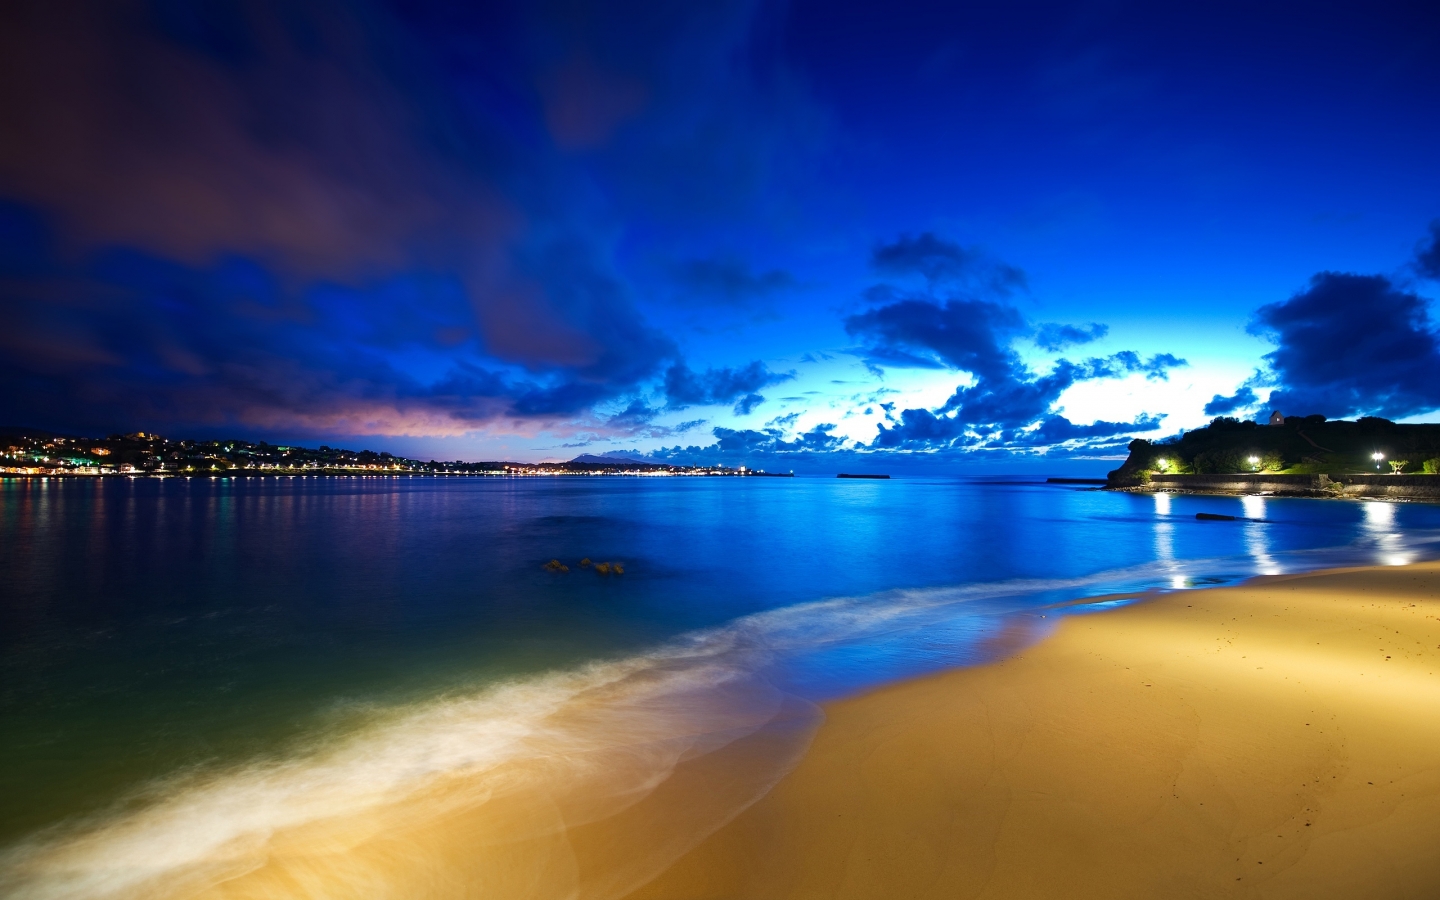 Luxury Beach for 1440 x 900 widescreen resolution